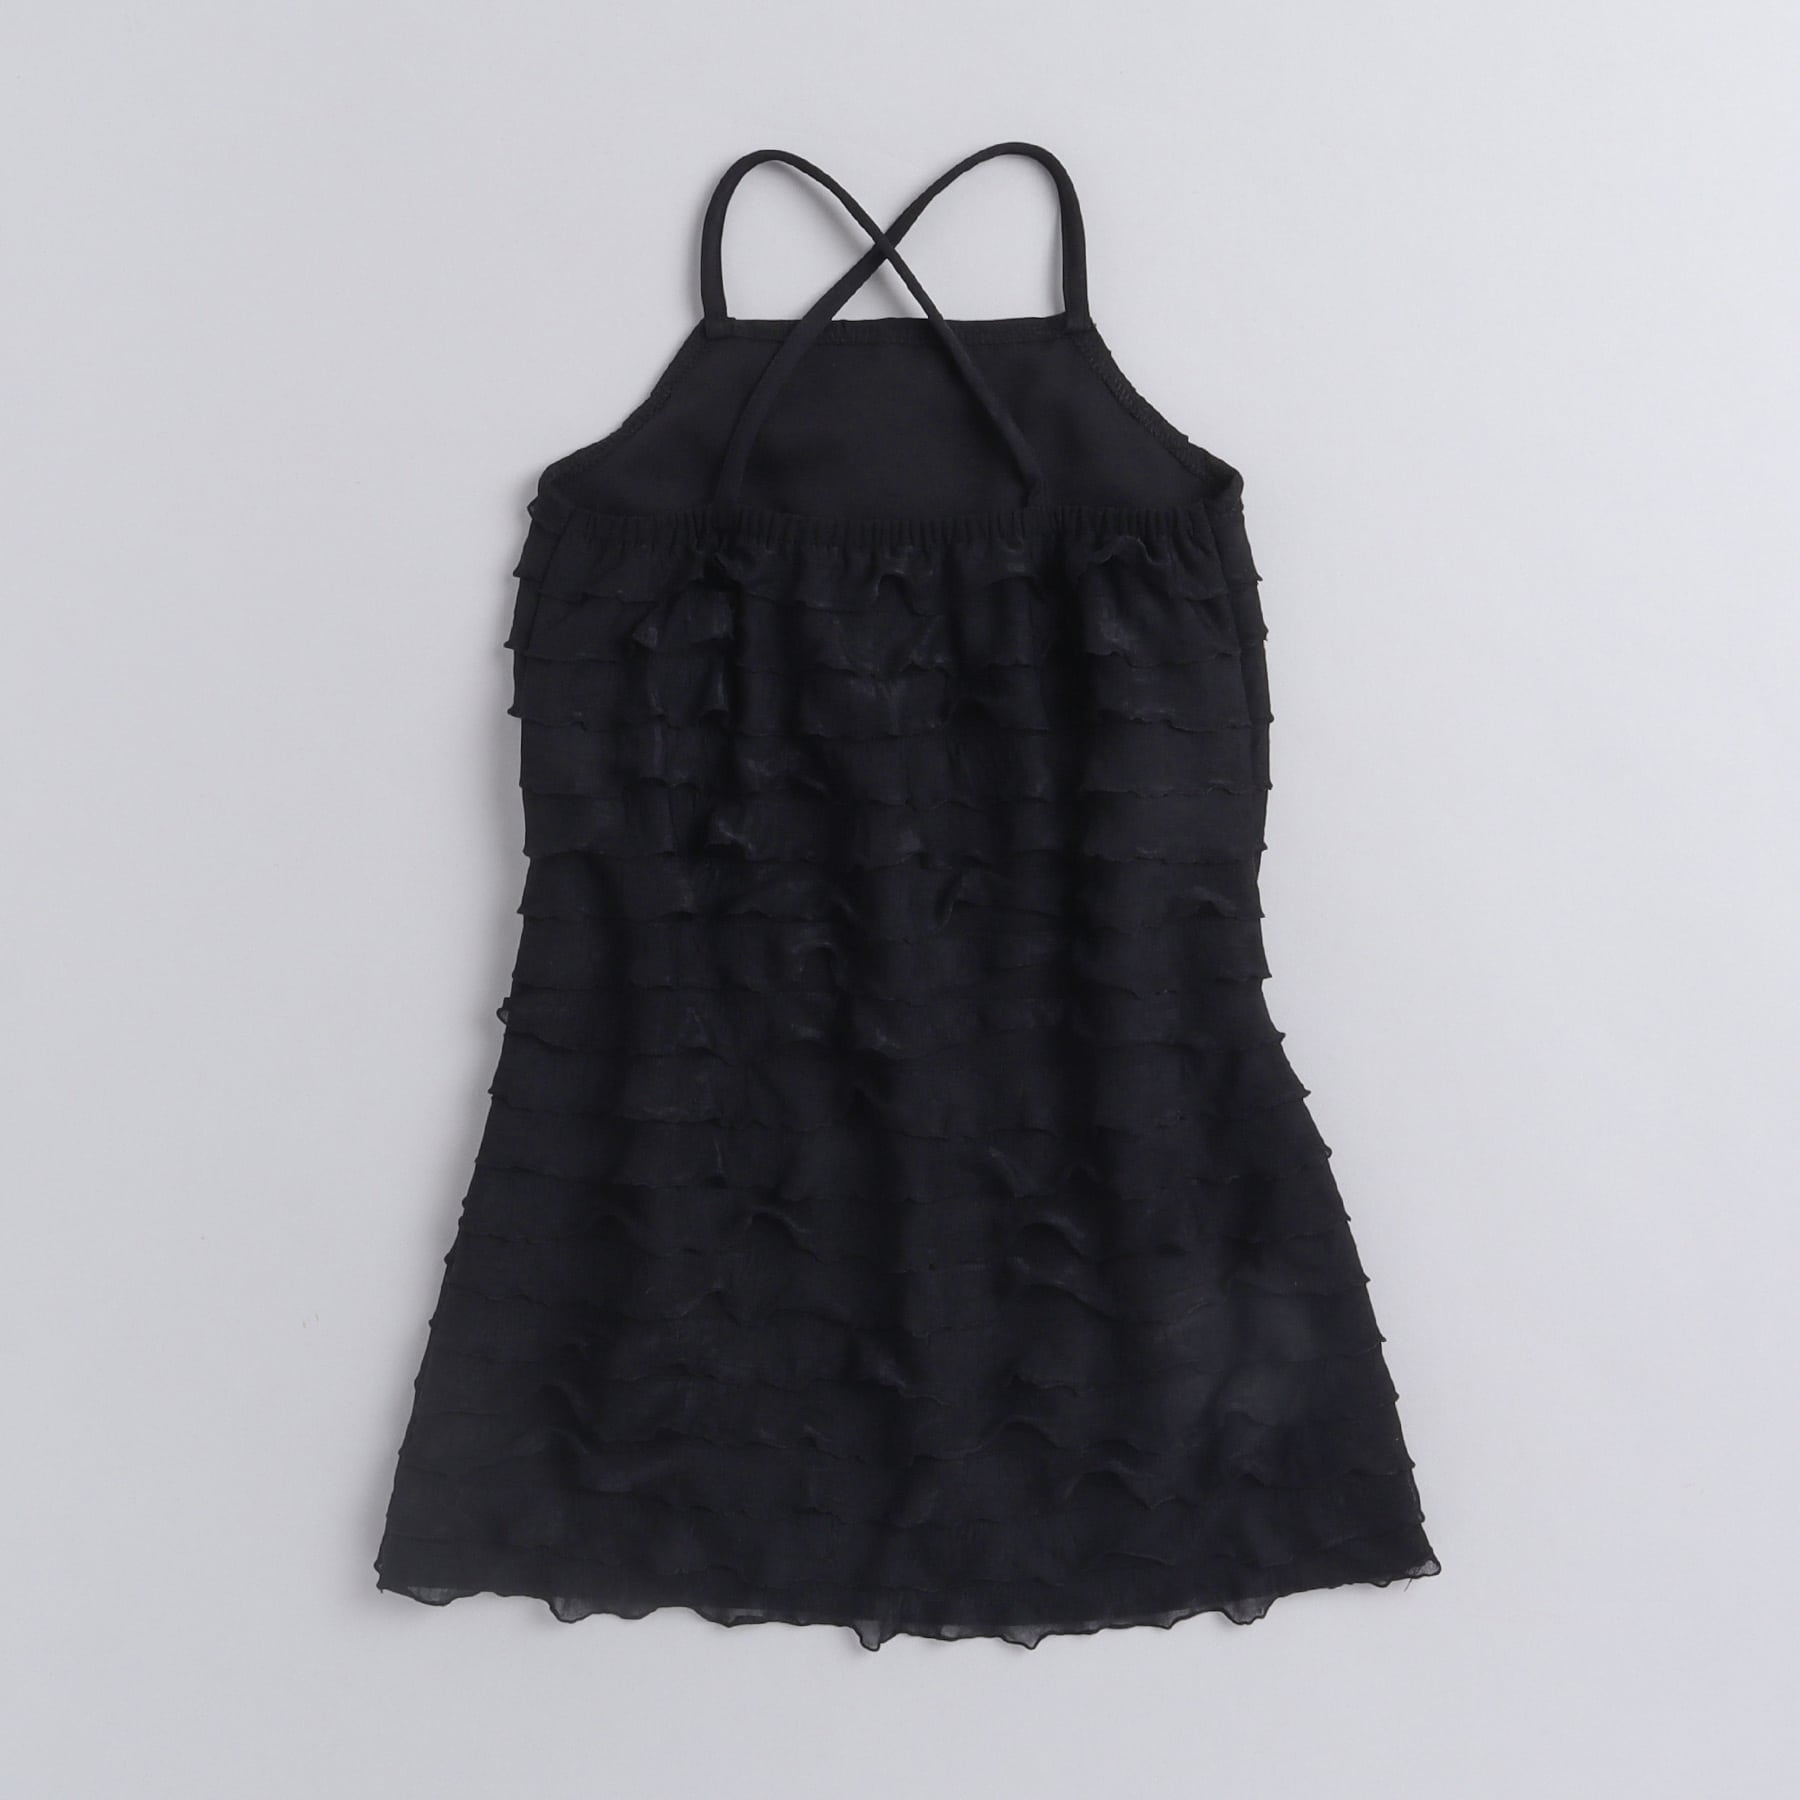 Girls Black Sleeveless Solid Ruffled Dress